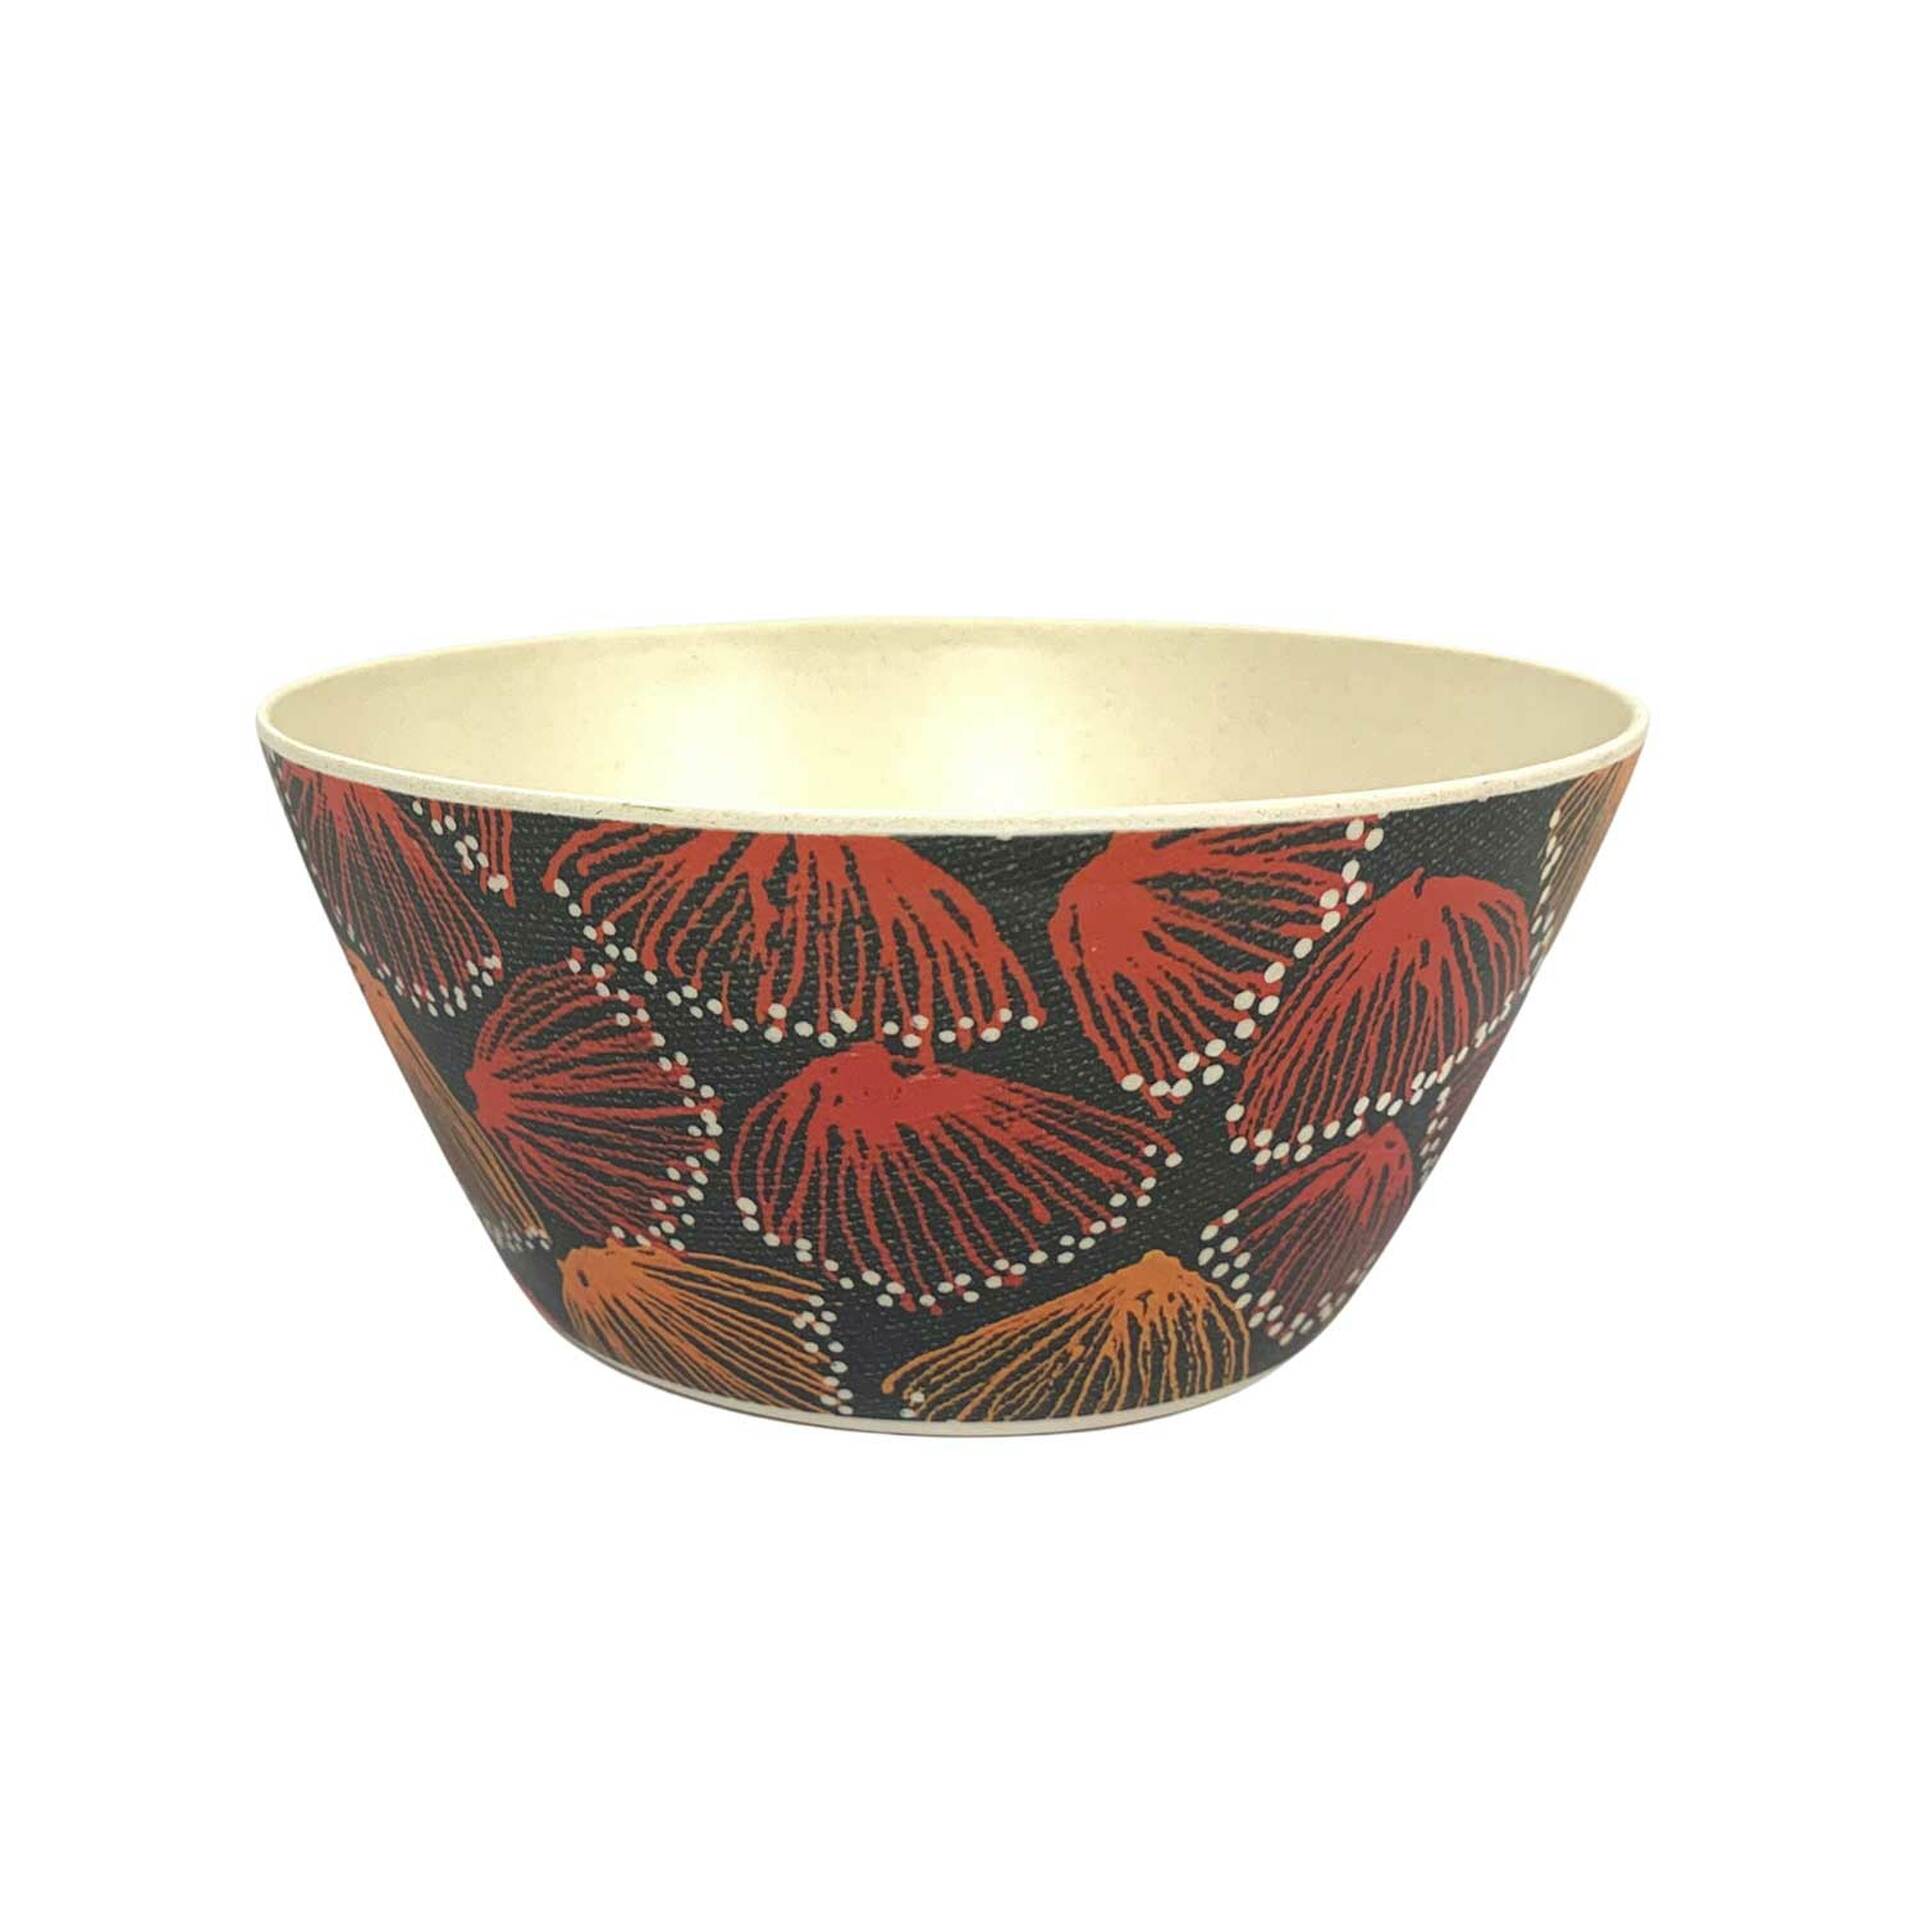 Bamboo Bowls - Selina Teece - Red